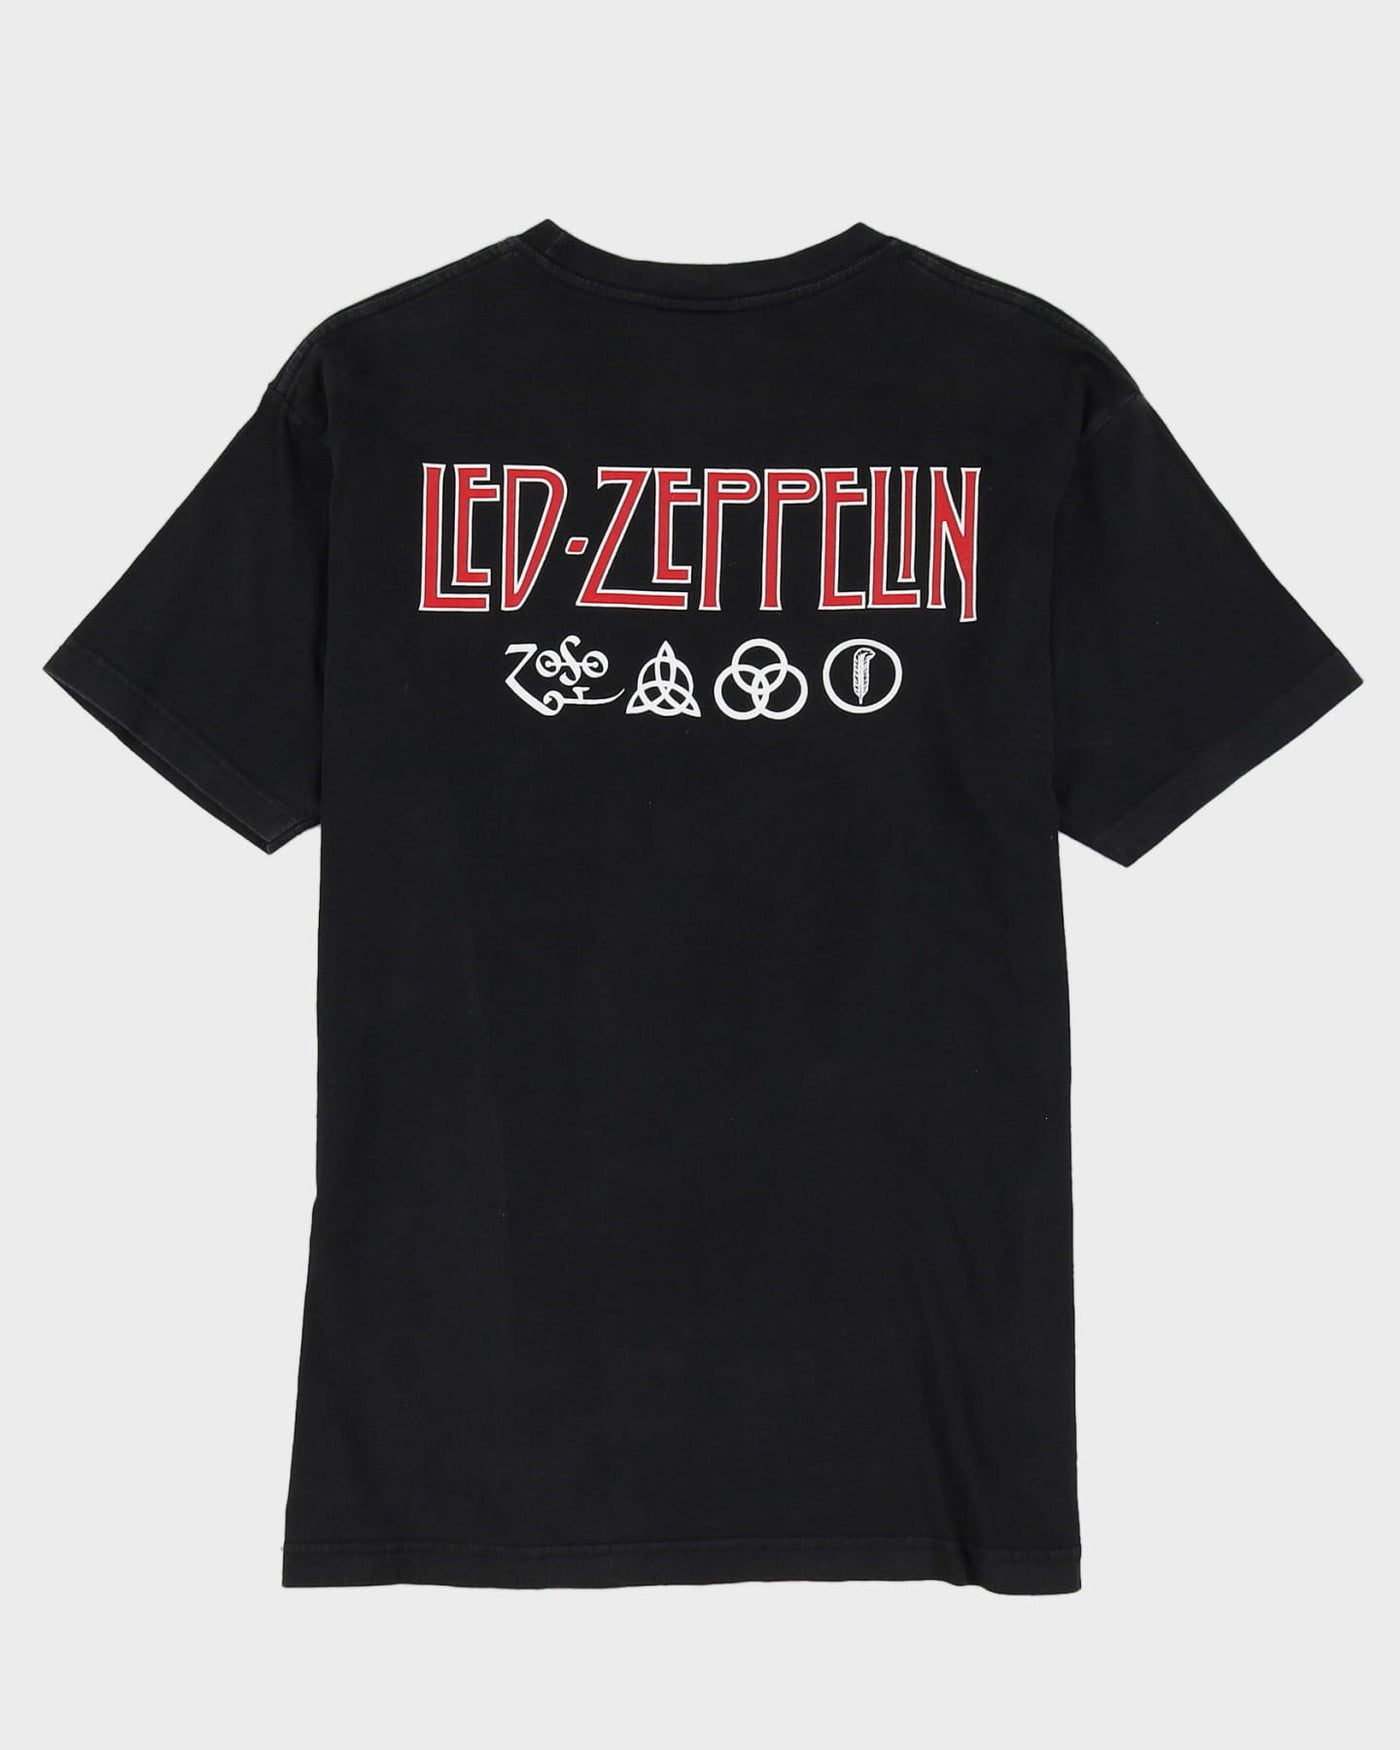 2004 Led Zeppelin Black Graphic Band T-Shirt - M